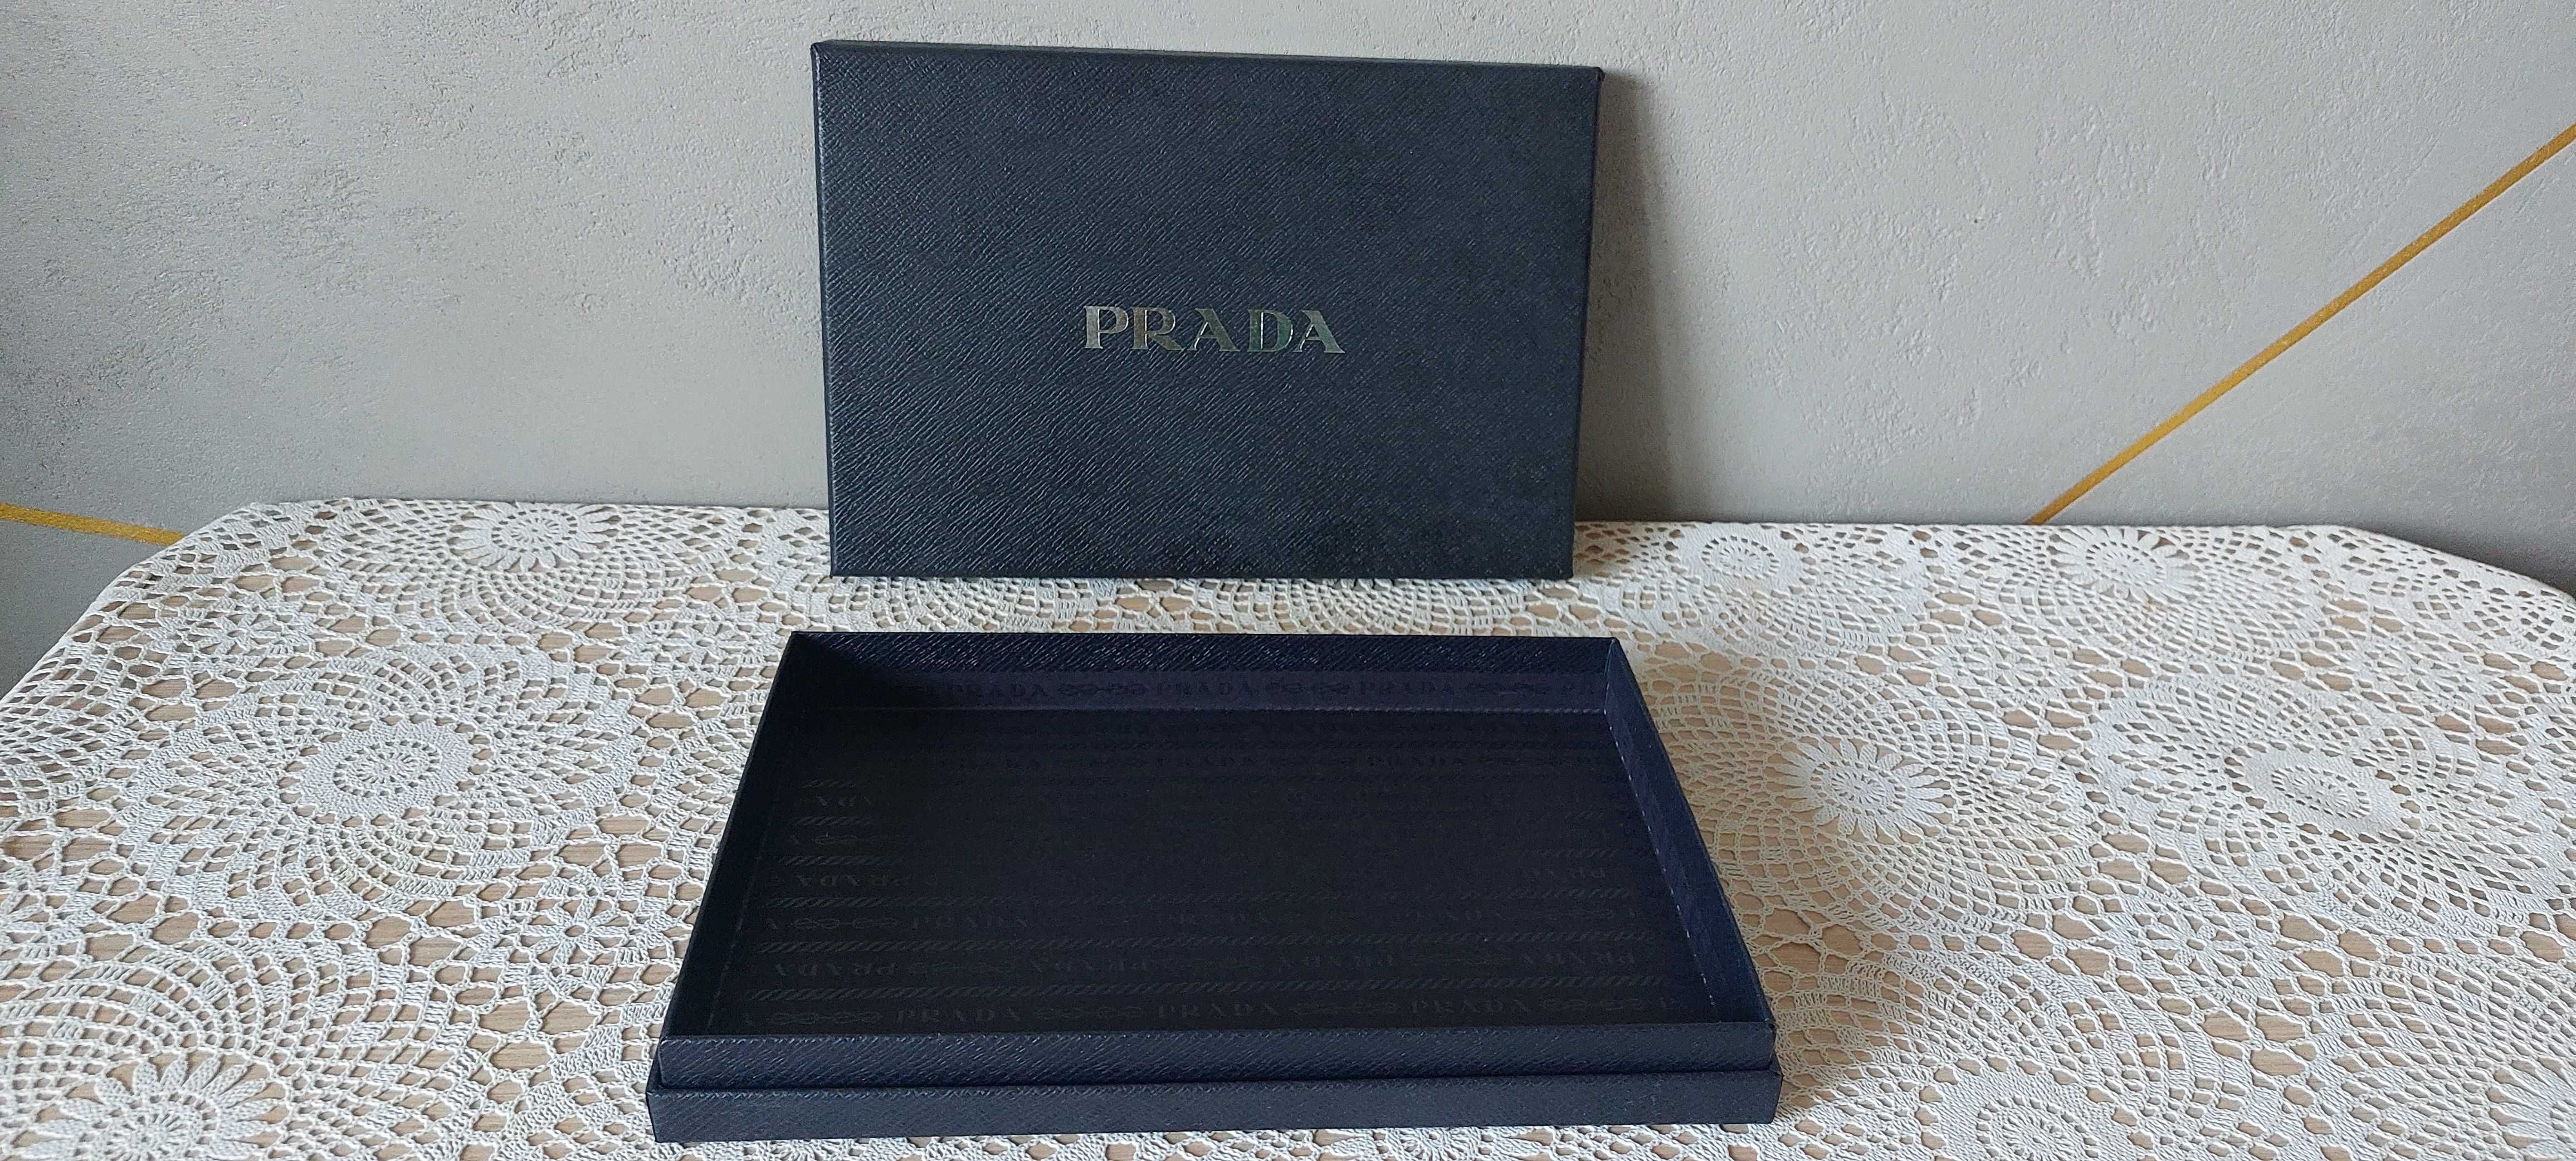 Pudełko PRADA - 24,5x16,5x3,5 cm - oryginalne, idealne na prezent